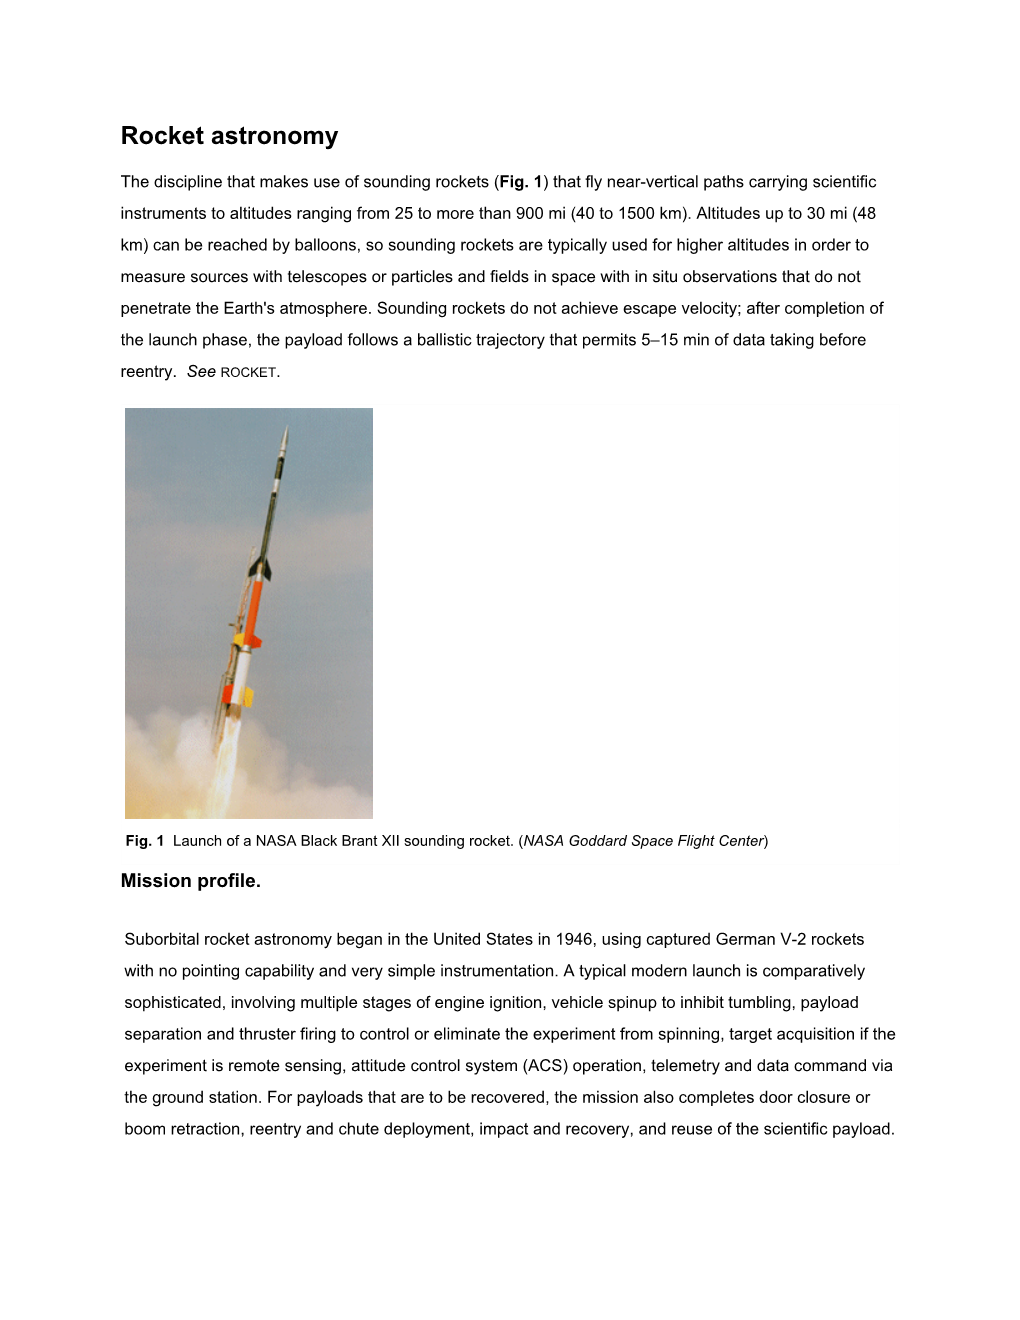 Rocket Astronomy